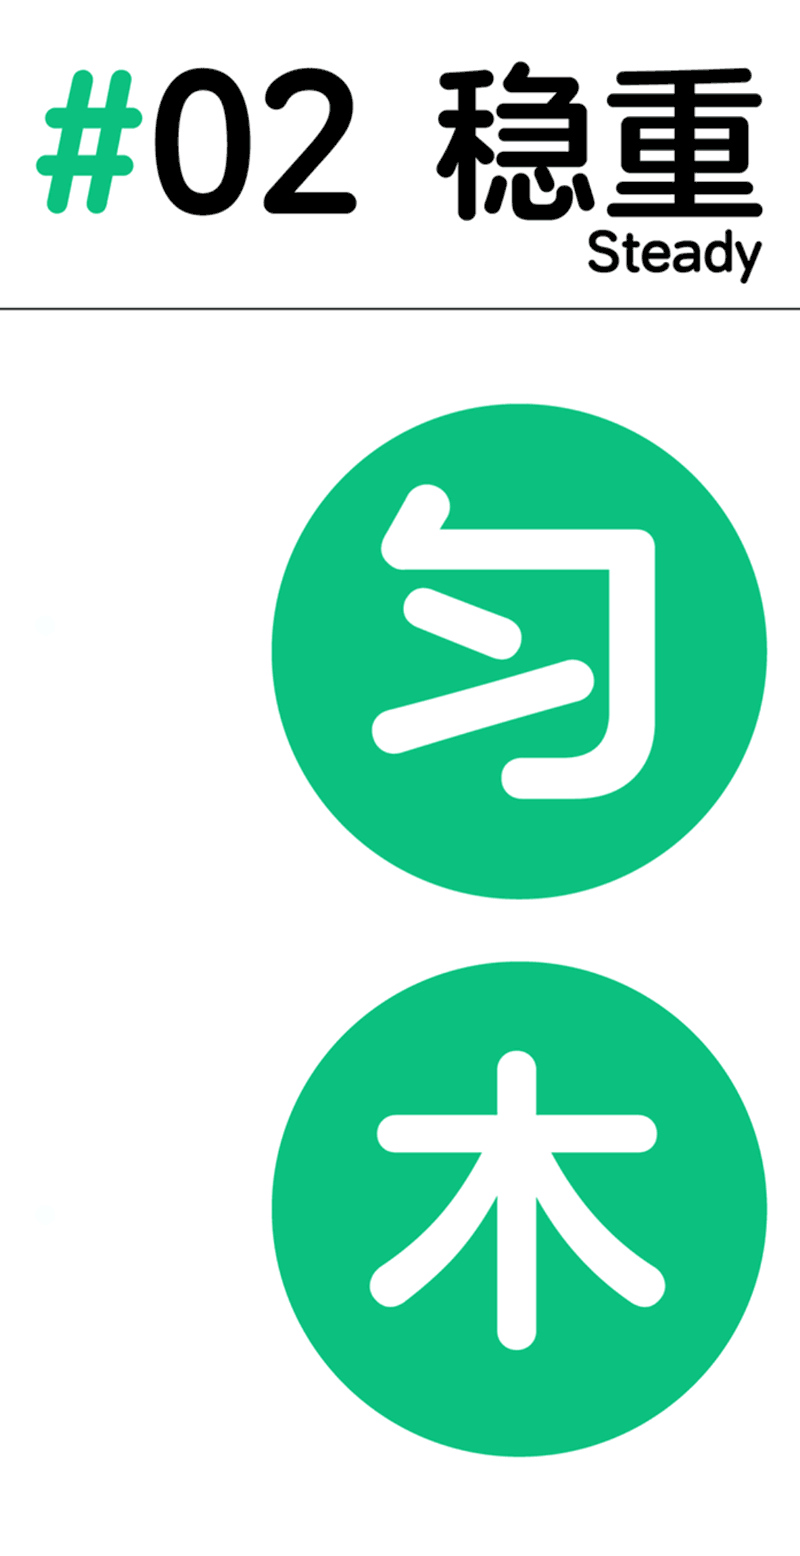 41P Inspiration Chinese font logo design scheme #.678